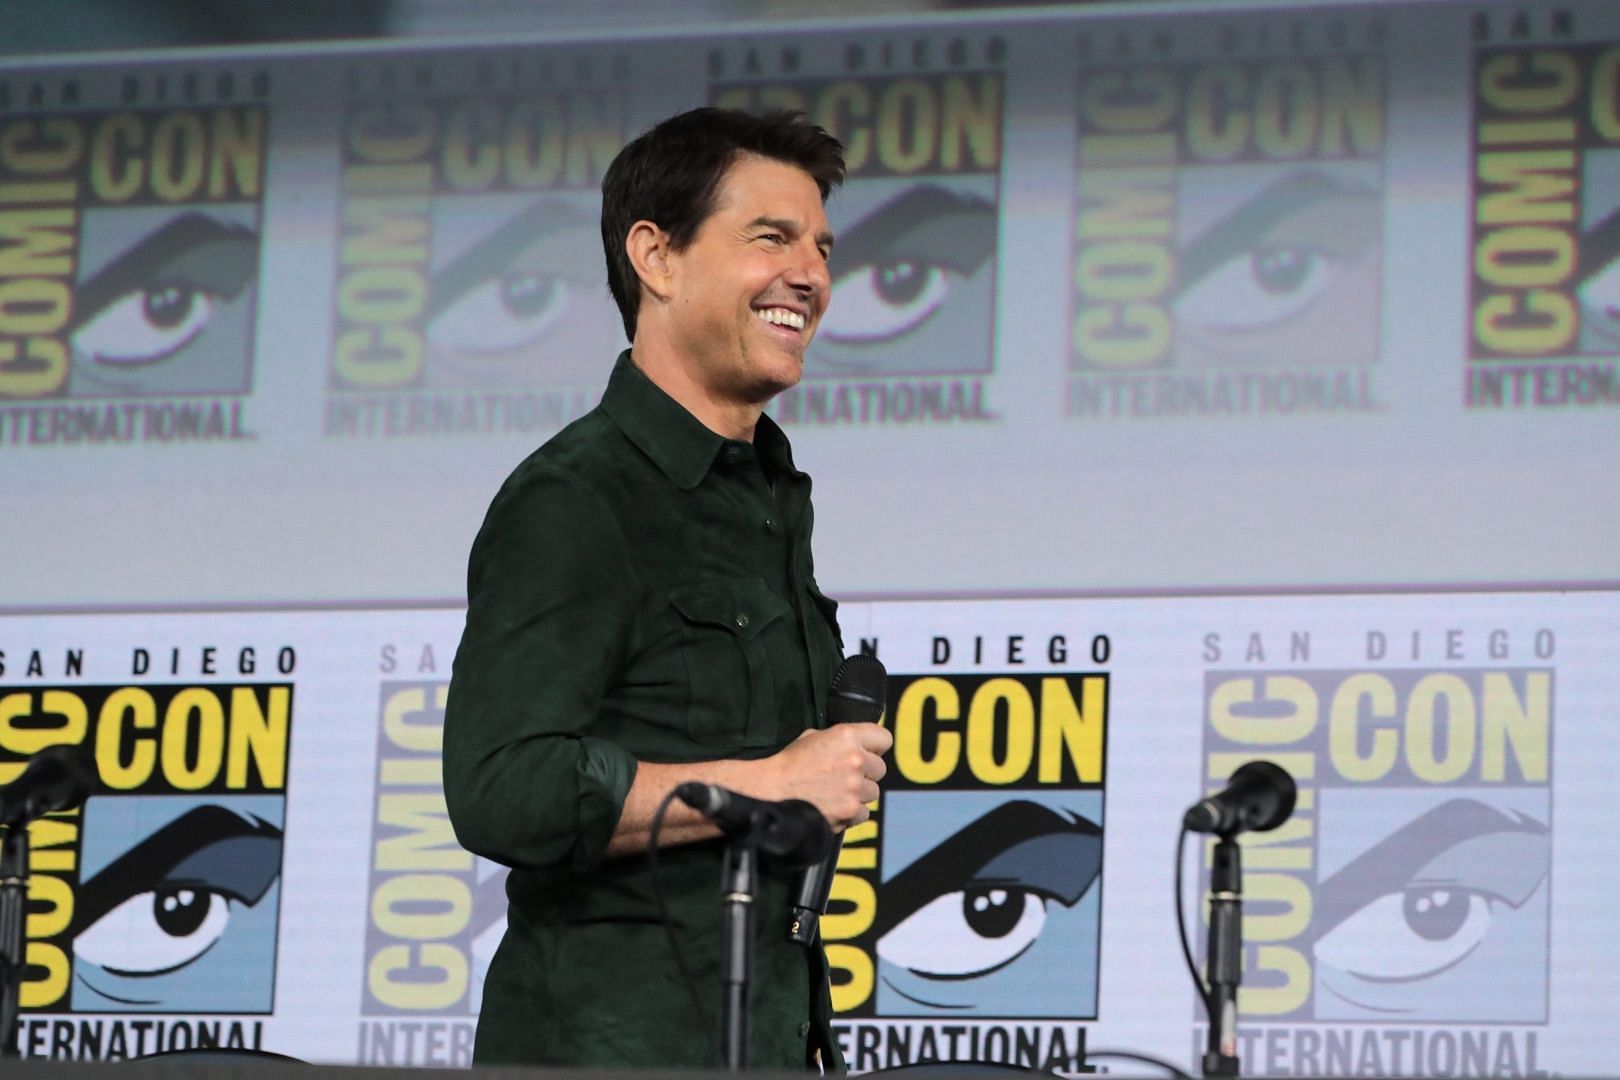 Tom Cruise at Comic-Con International: San Diego (Image via @TomCruise/Twitter)